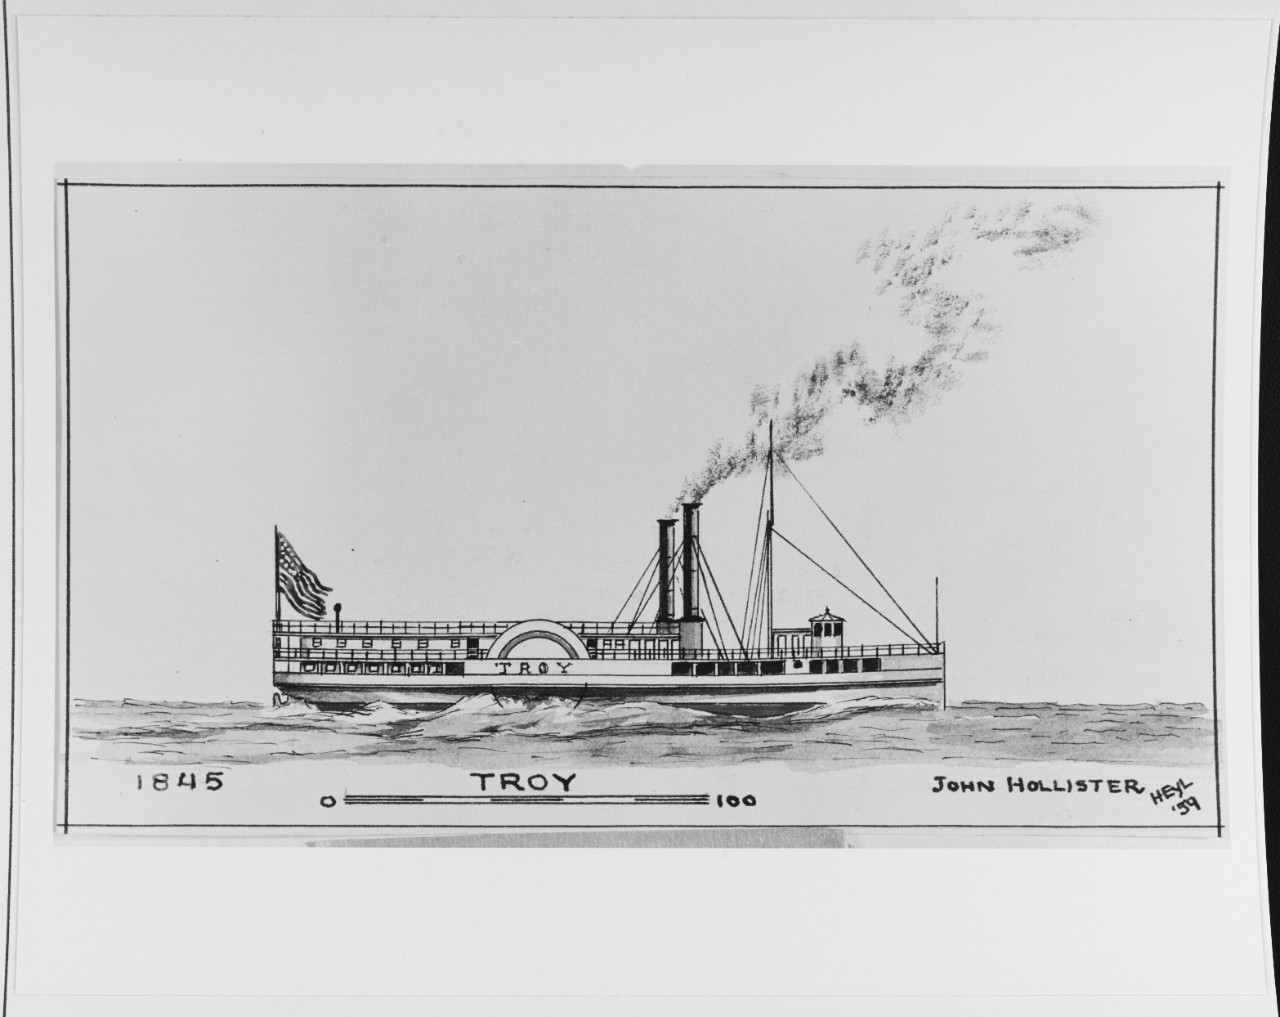 TROY (American Merchant Steamer, 1845-61)